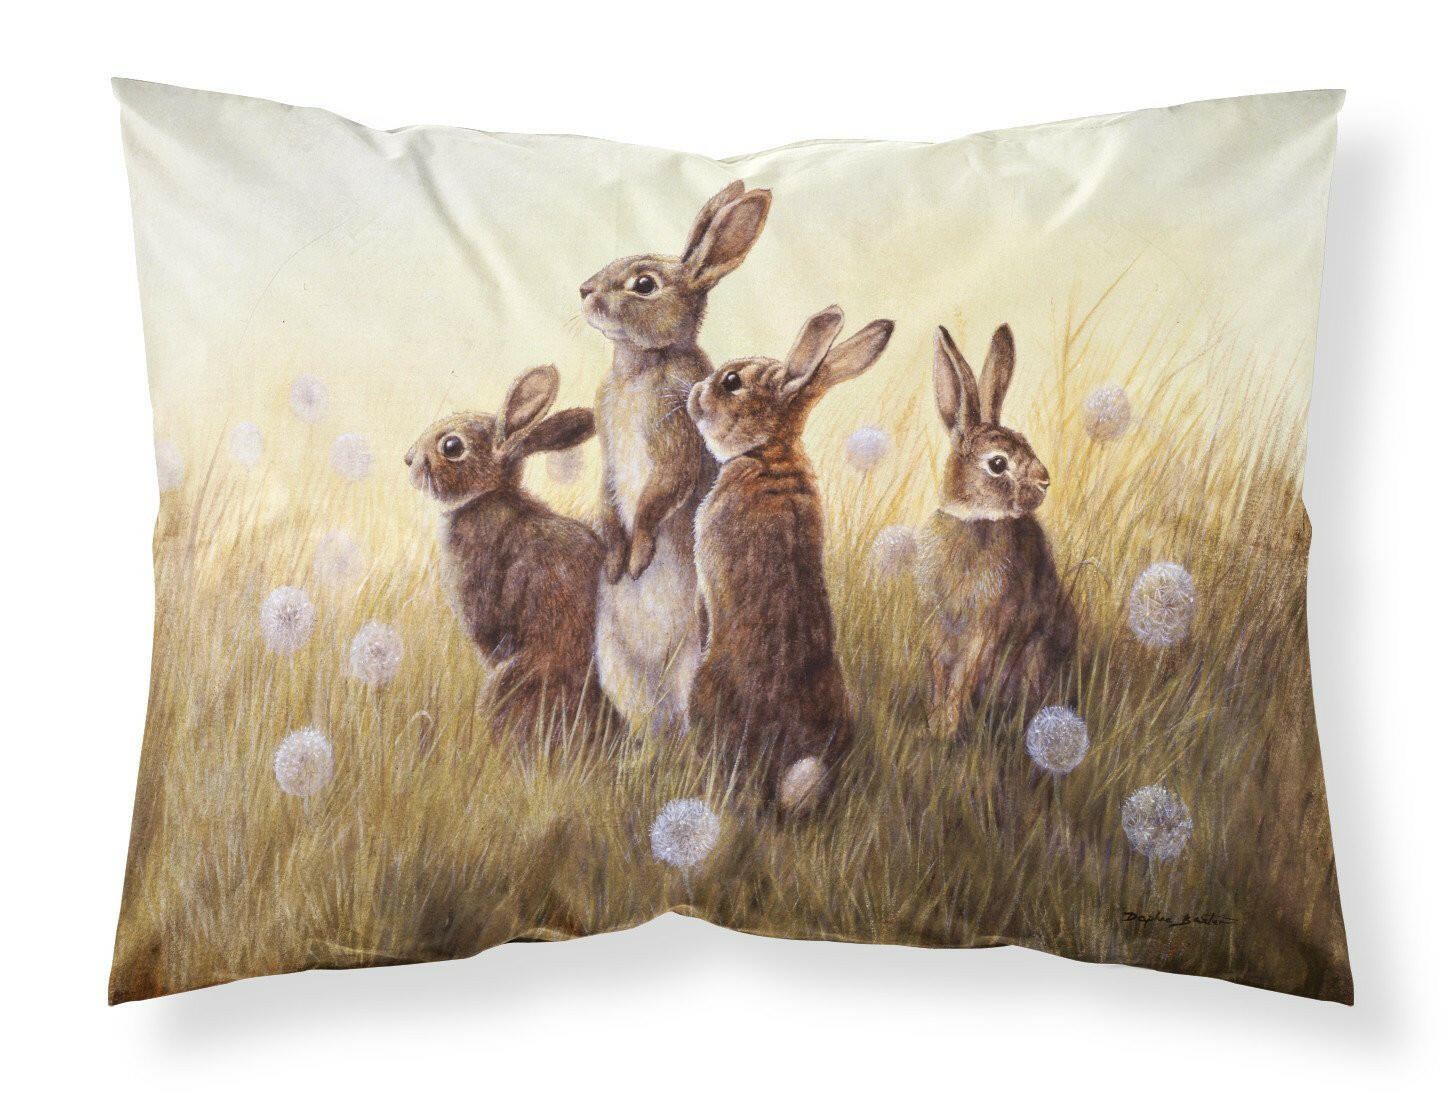 Rabbits in the Dandelions Fabric Standard Pillowcase BDBA0144PILLOWCASE by Caroline's Treasures